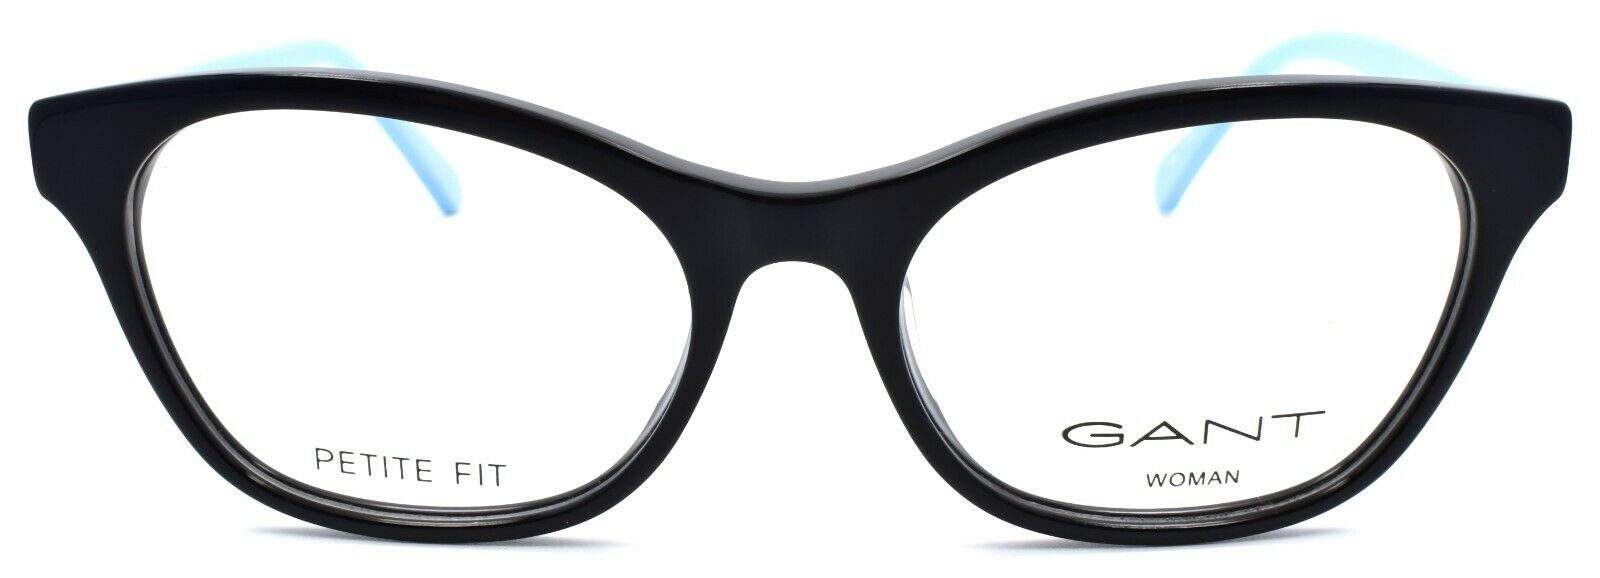 2-GANT GA4099 001 Women's Eyeglasses Frames Petite 50-16-140 Black-889214183705-IKSpecs